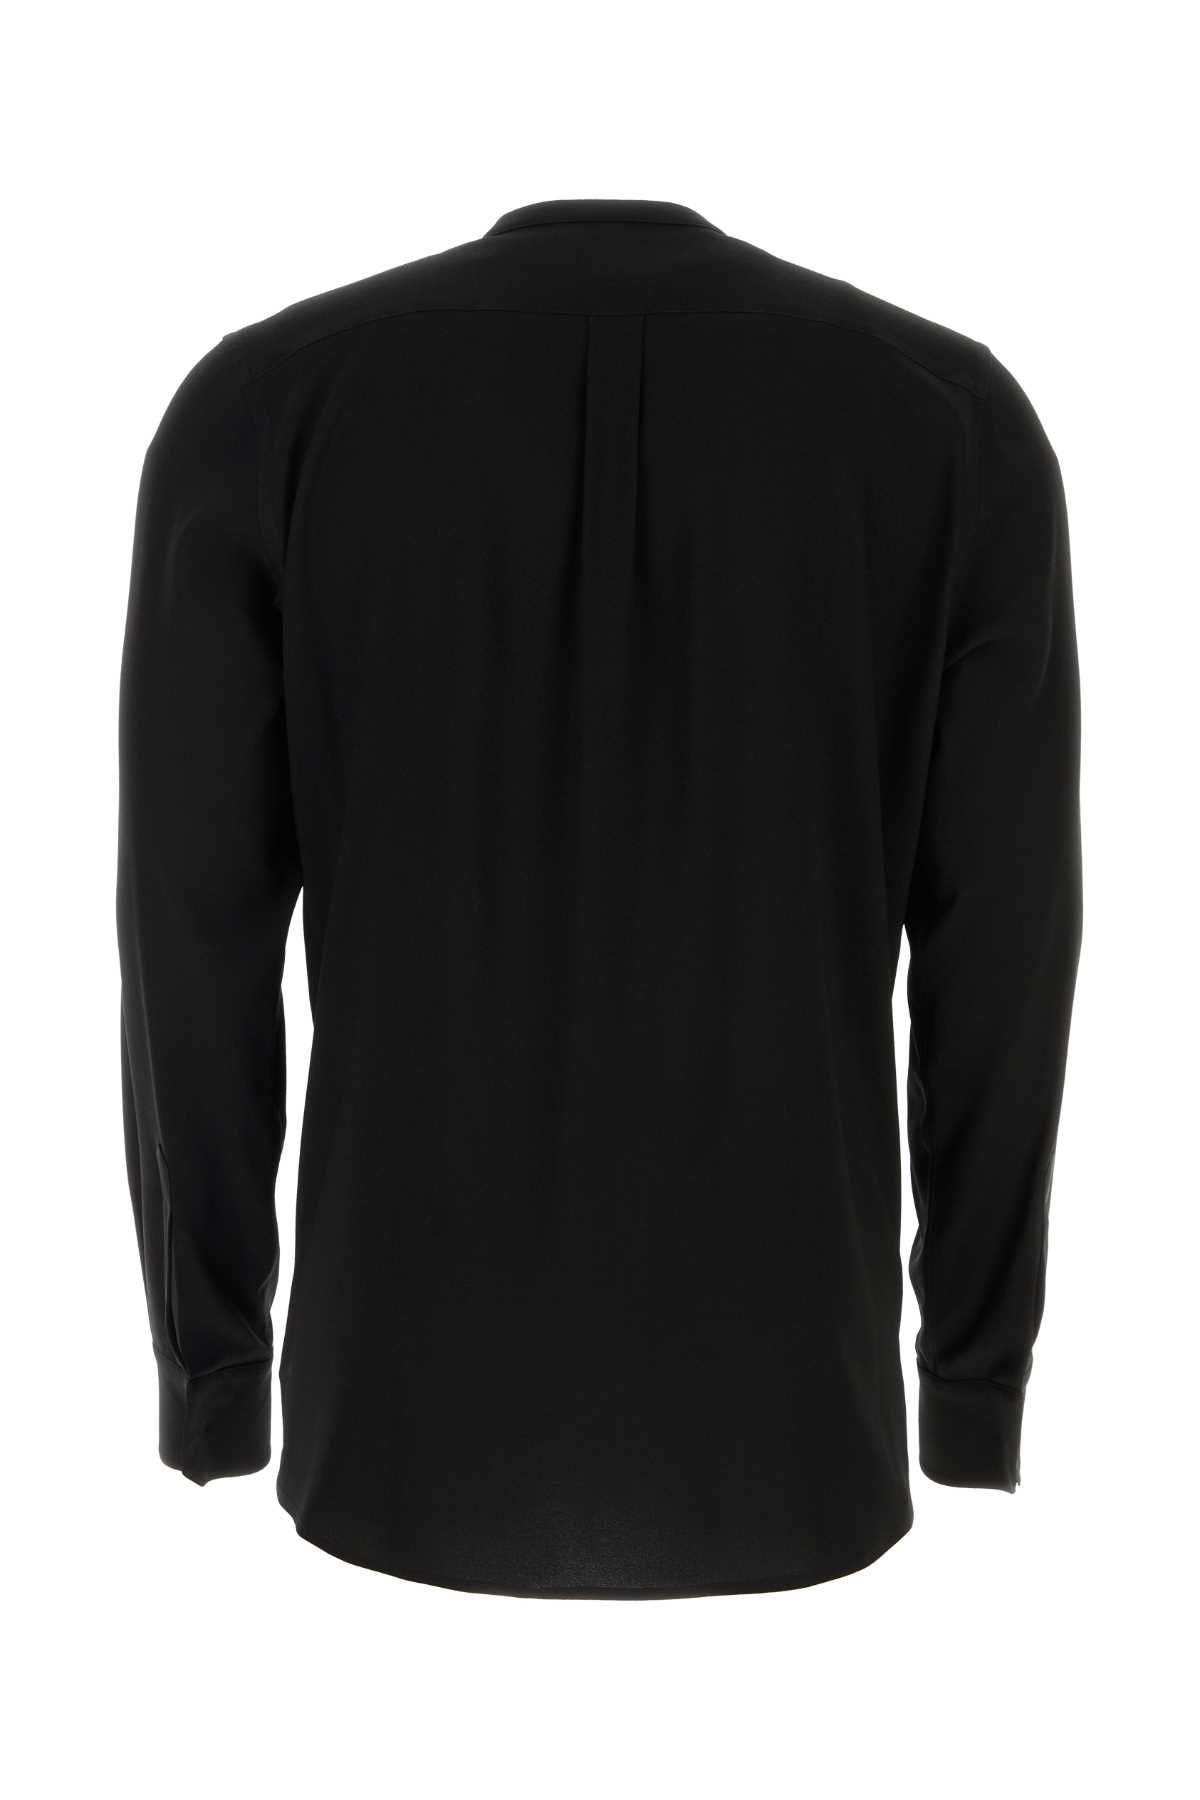 Dolce & Gabbana Black Crepe Shirt In Nero